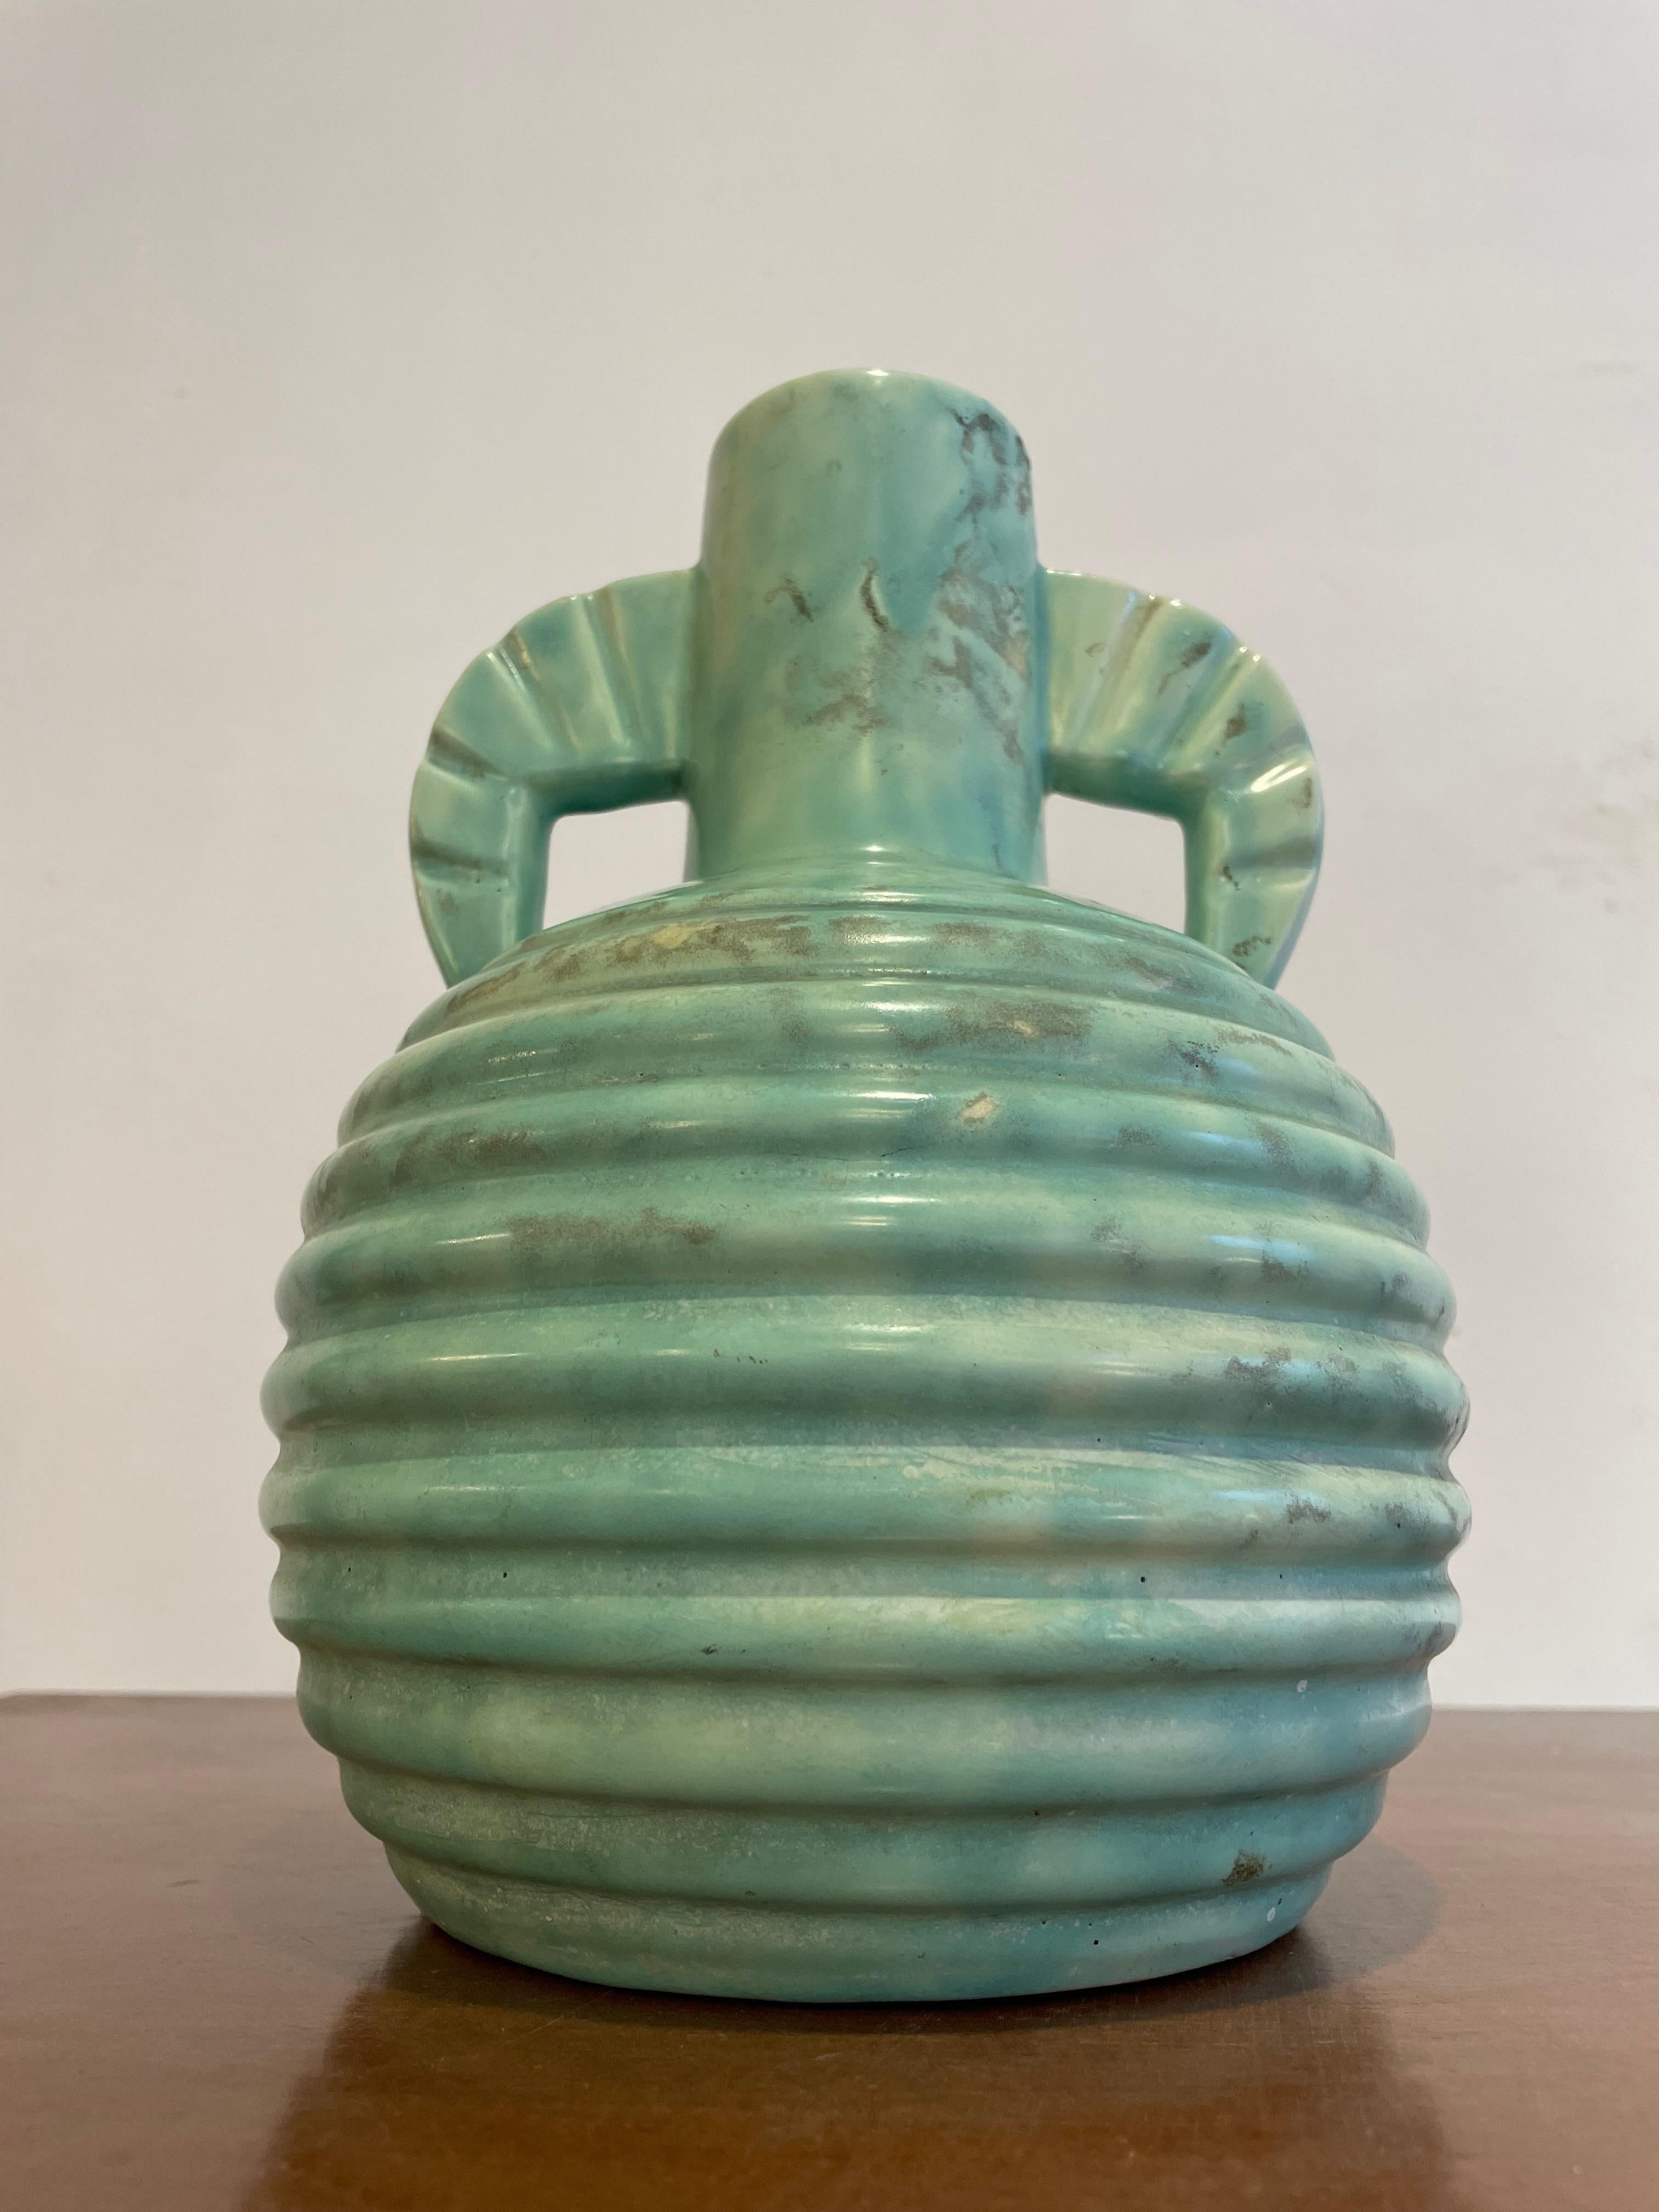 Bleu ceramic vase by Boch, 1920s.